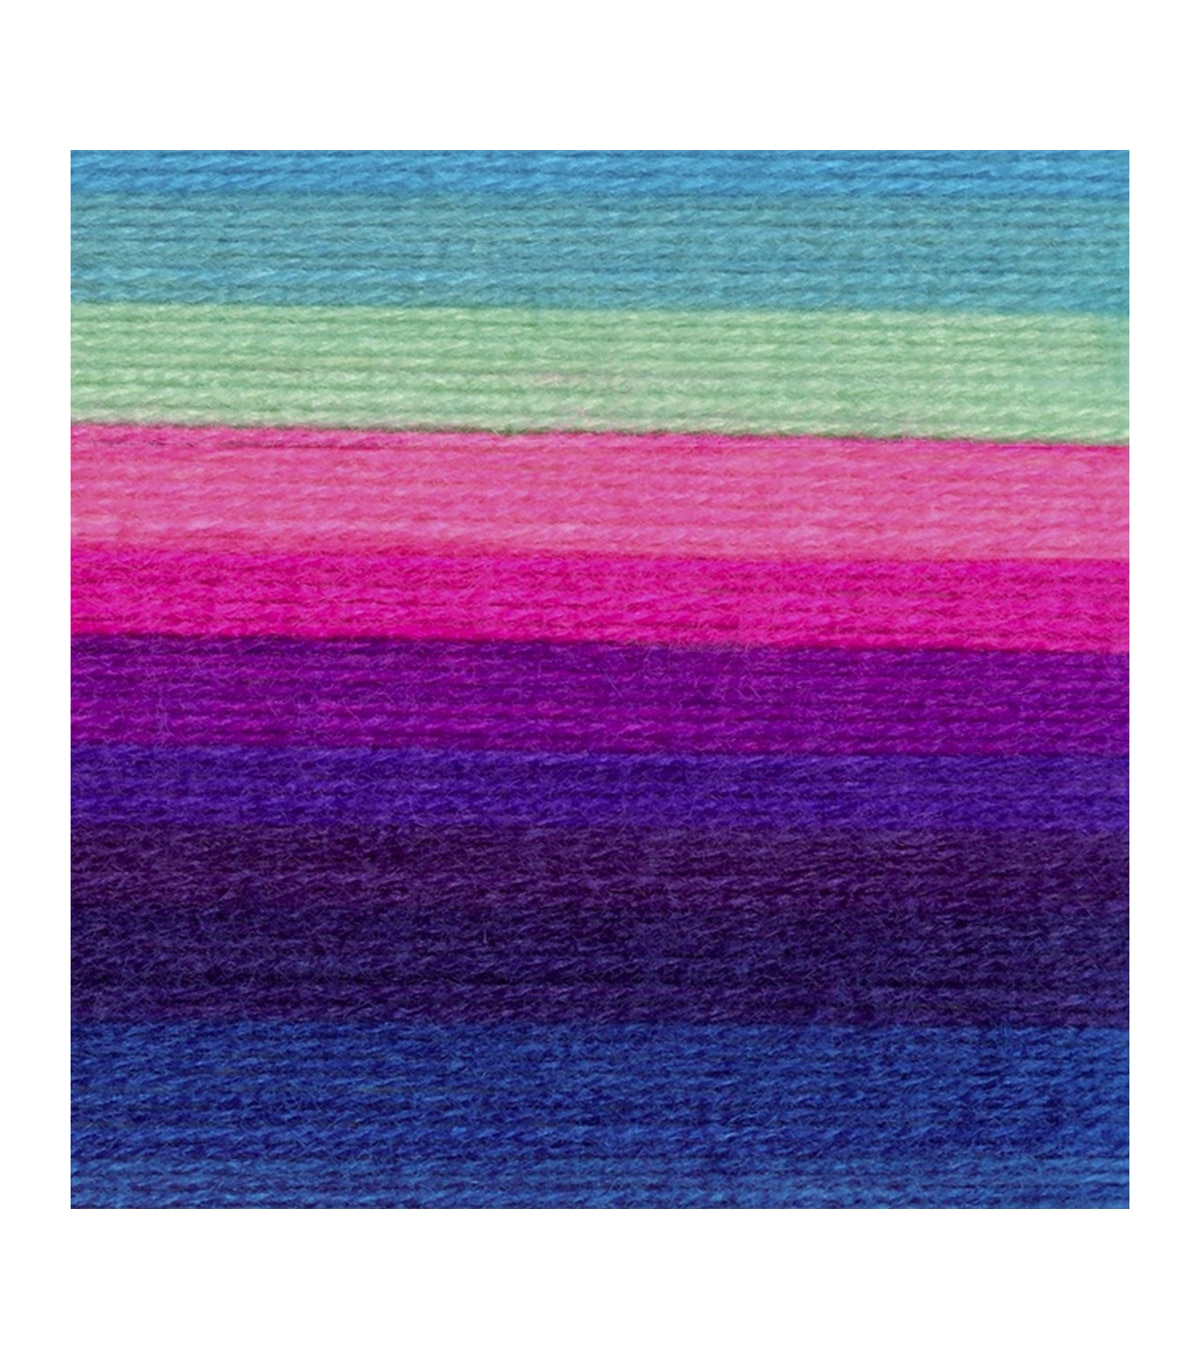 Mandala Yarn Color Chart